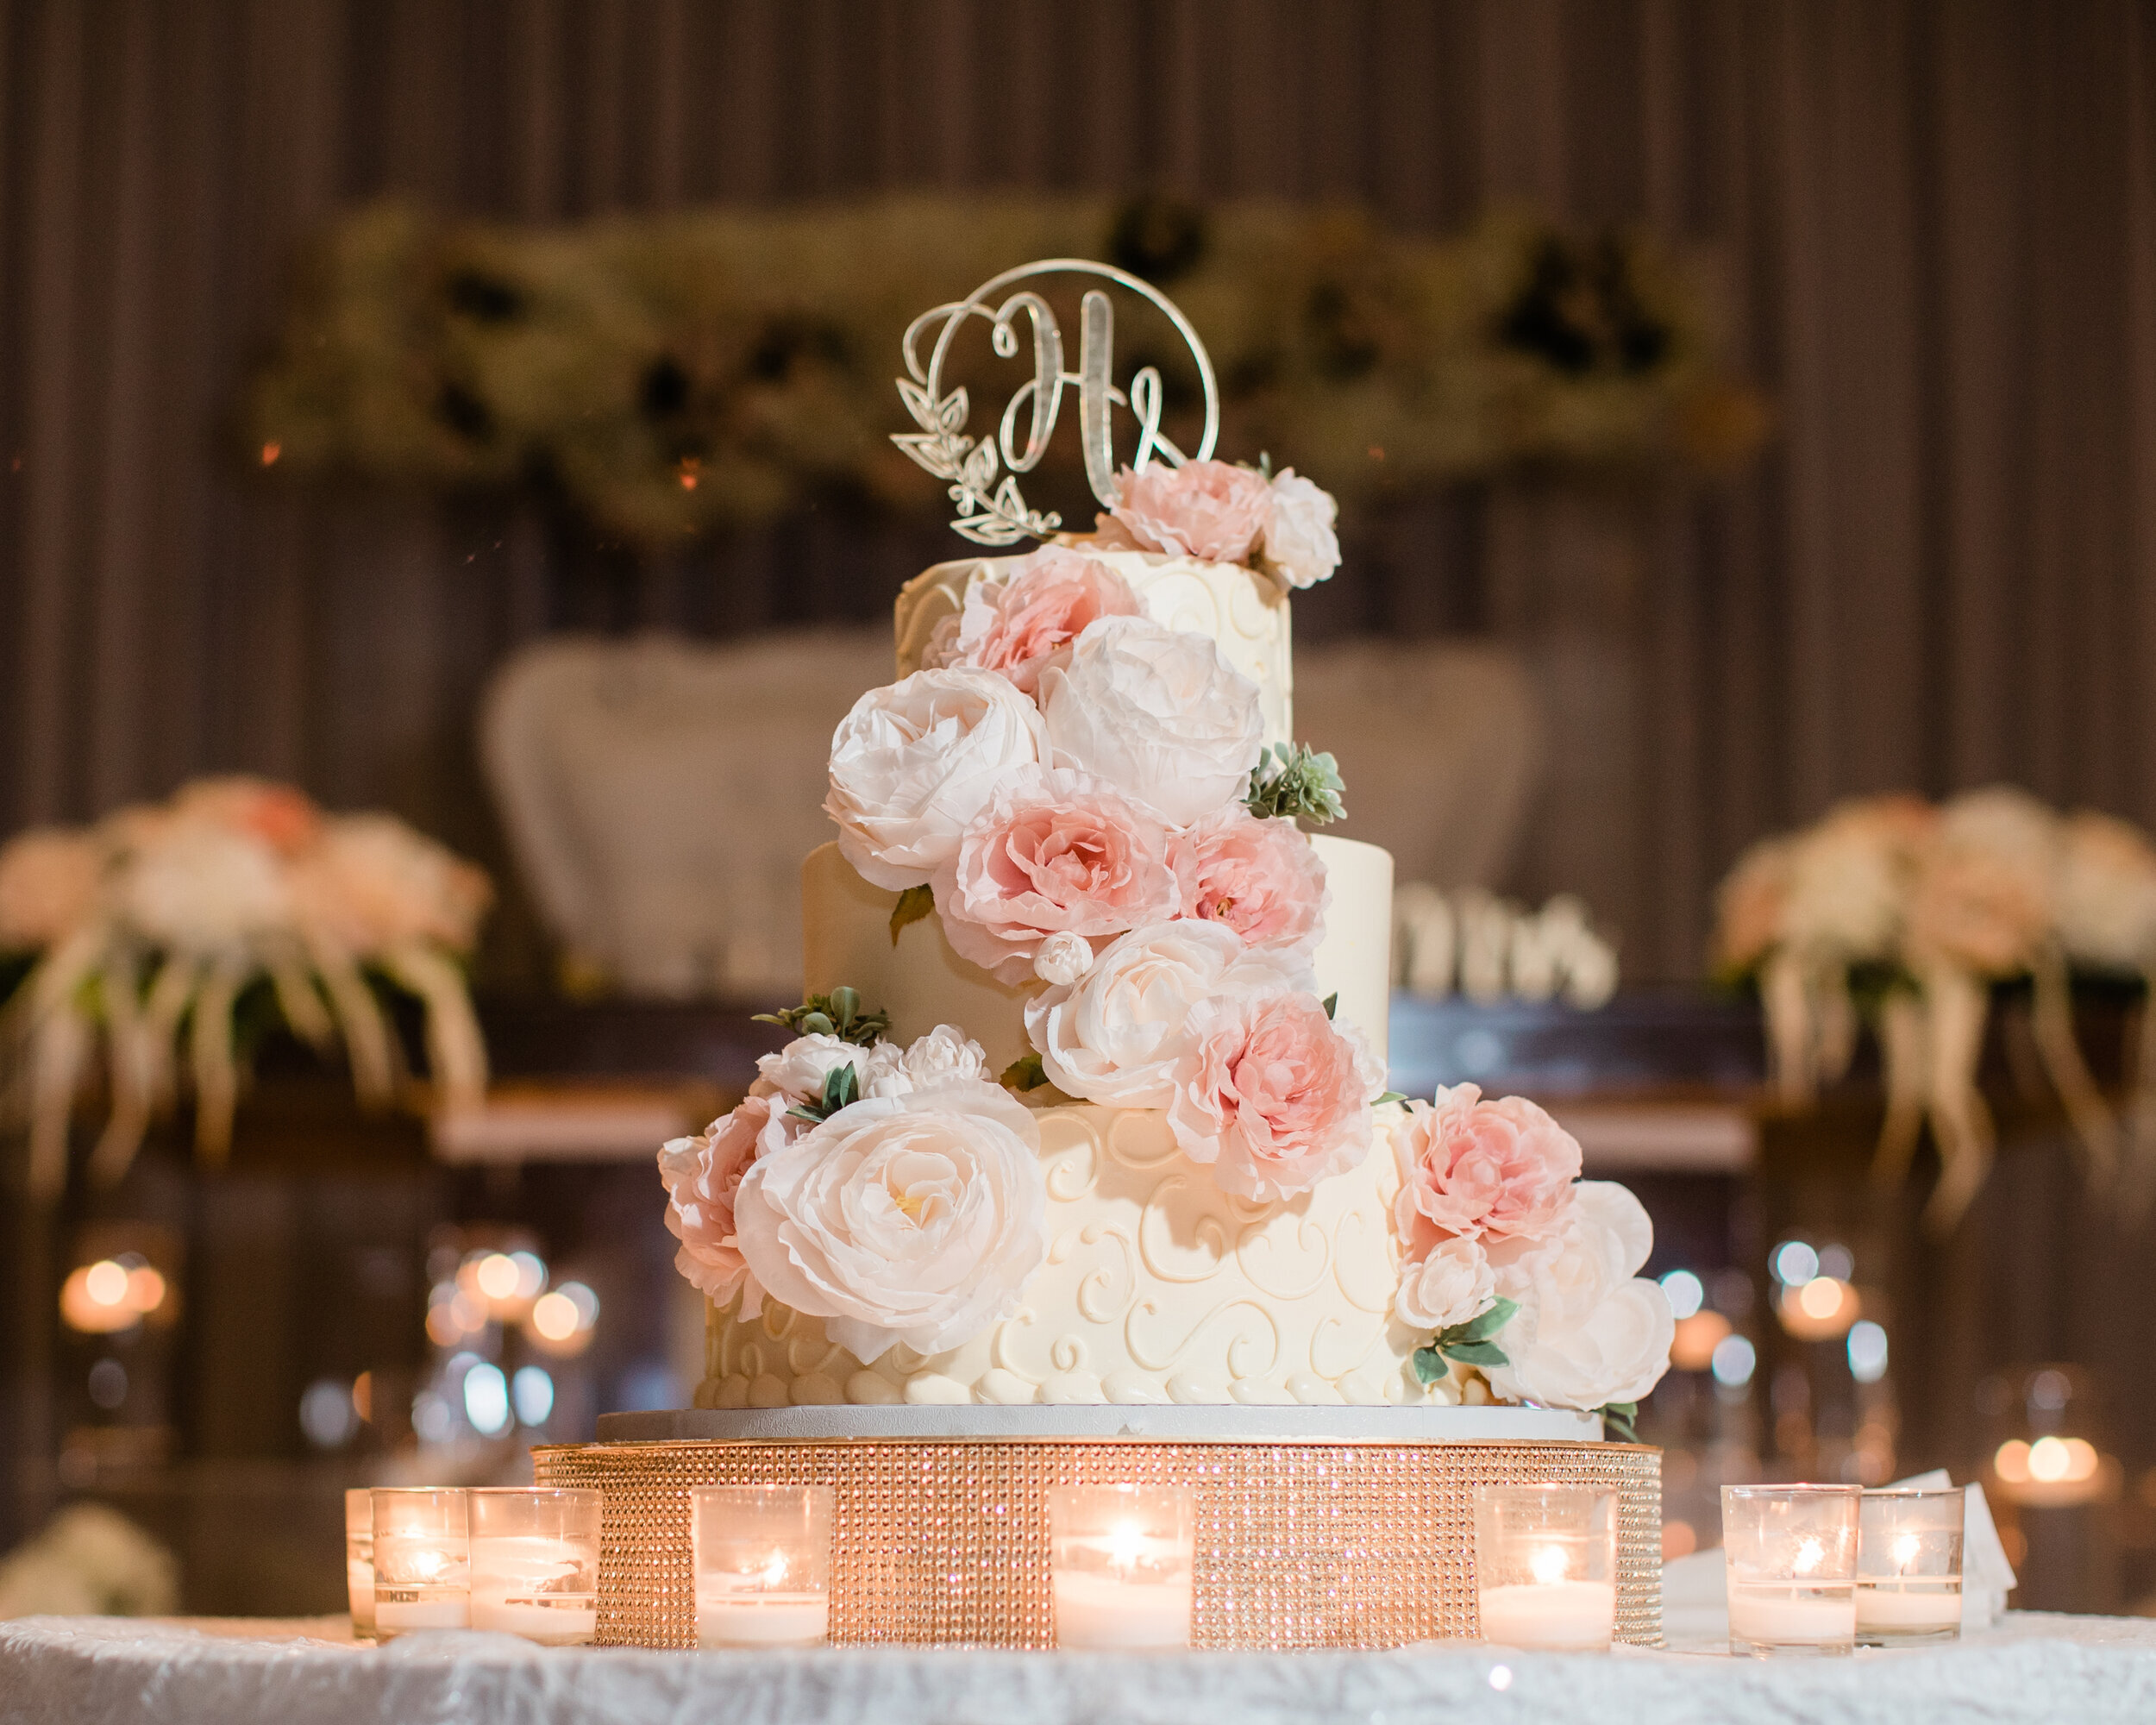 Best Wedding Cake in Baltimore and DC Shot by Megapixels Media.jpeg